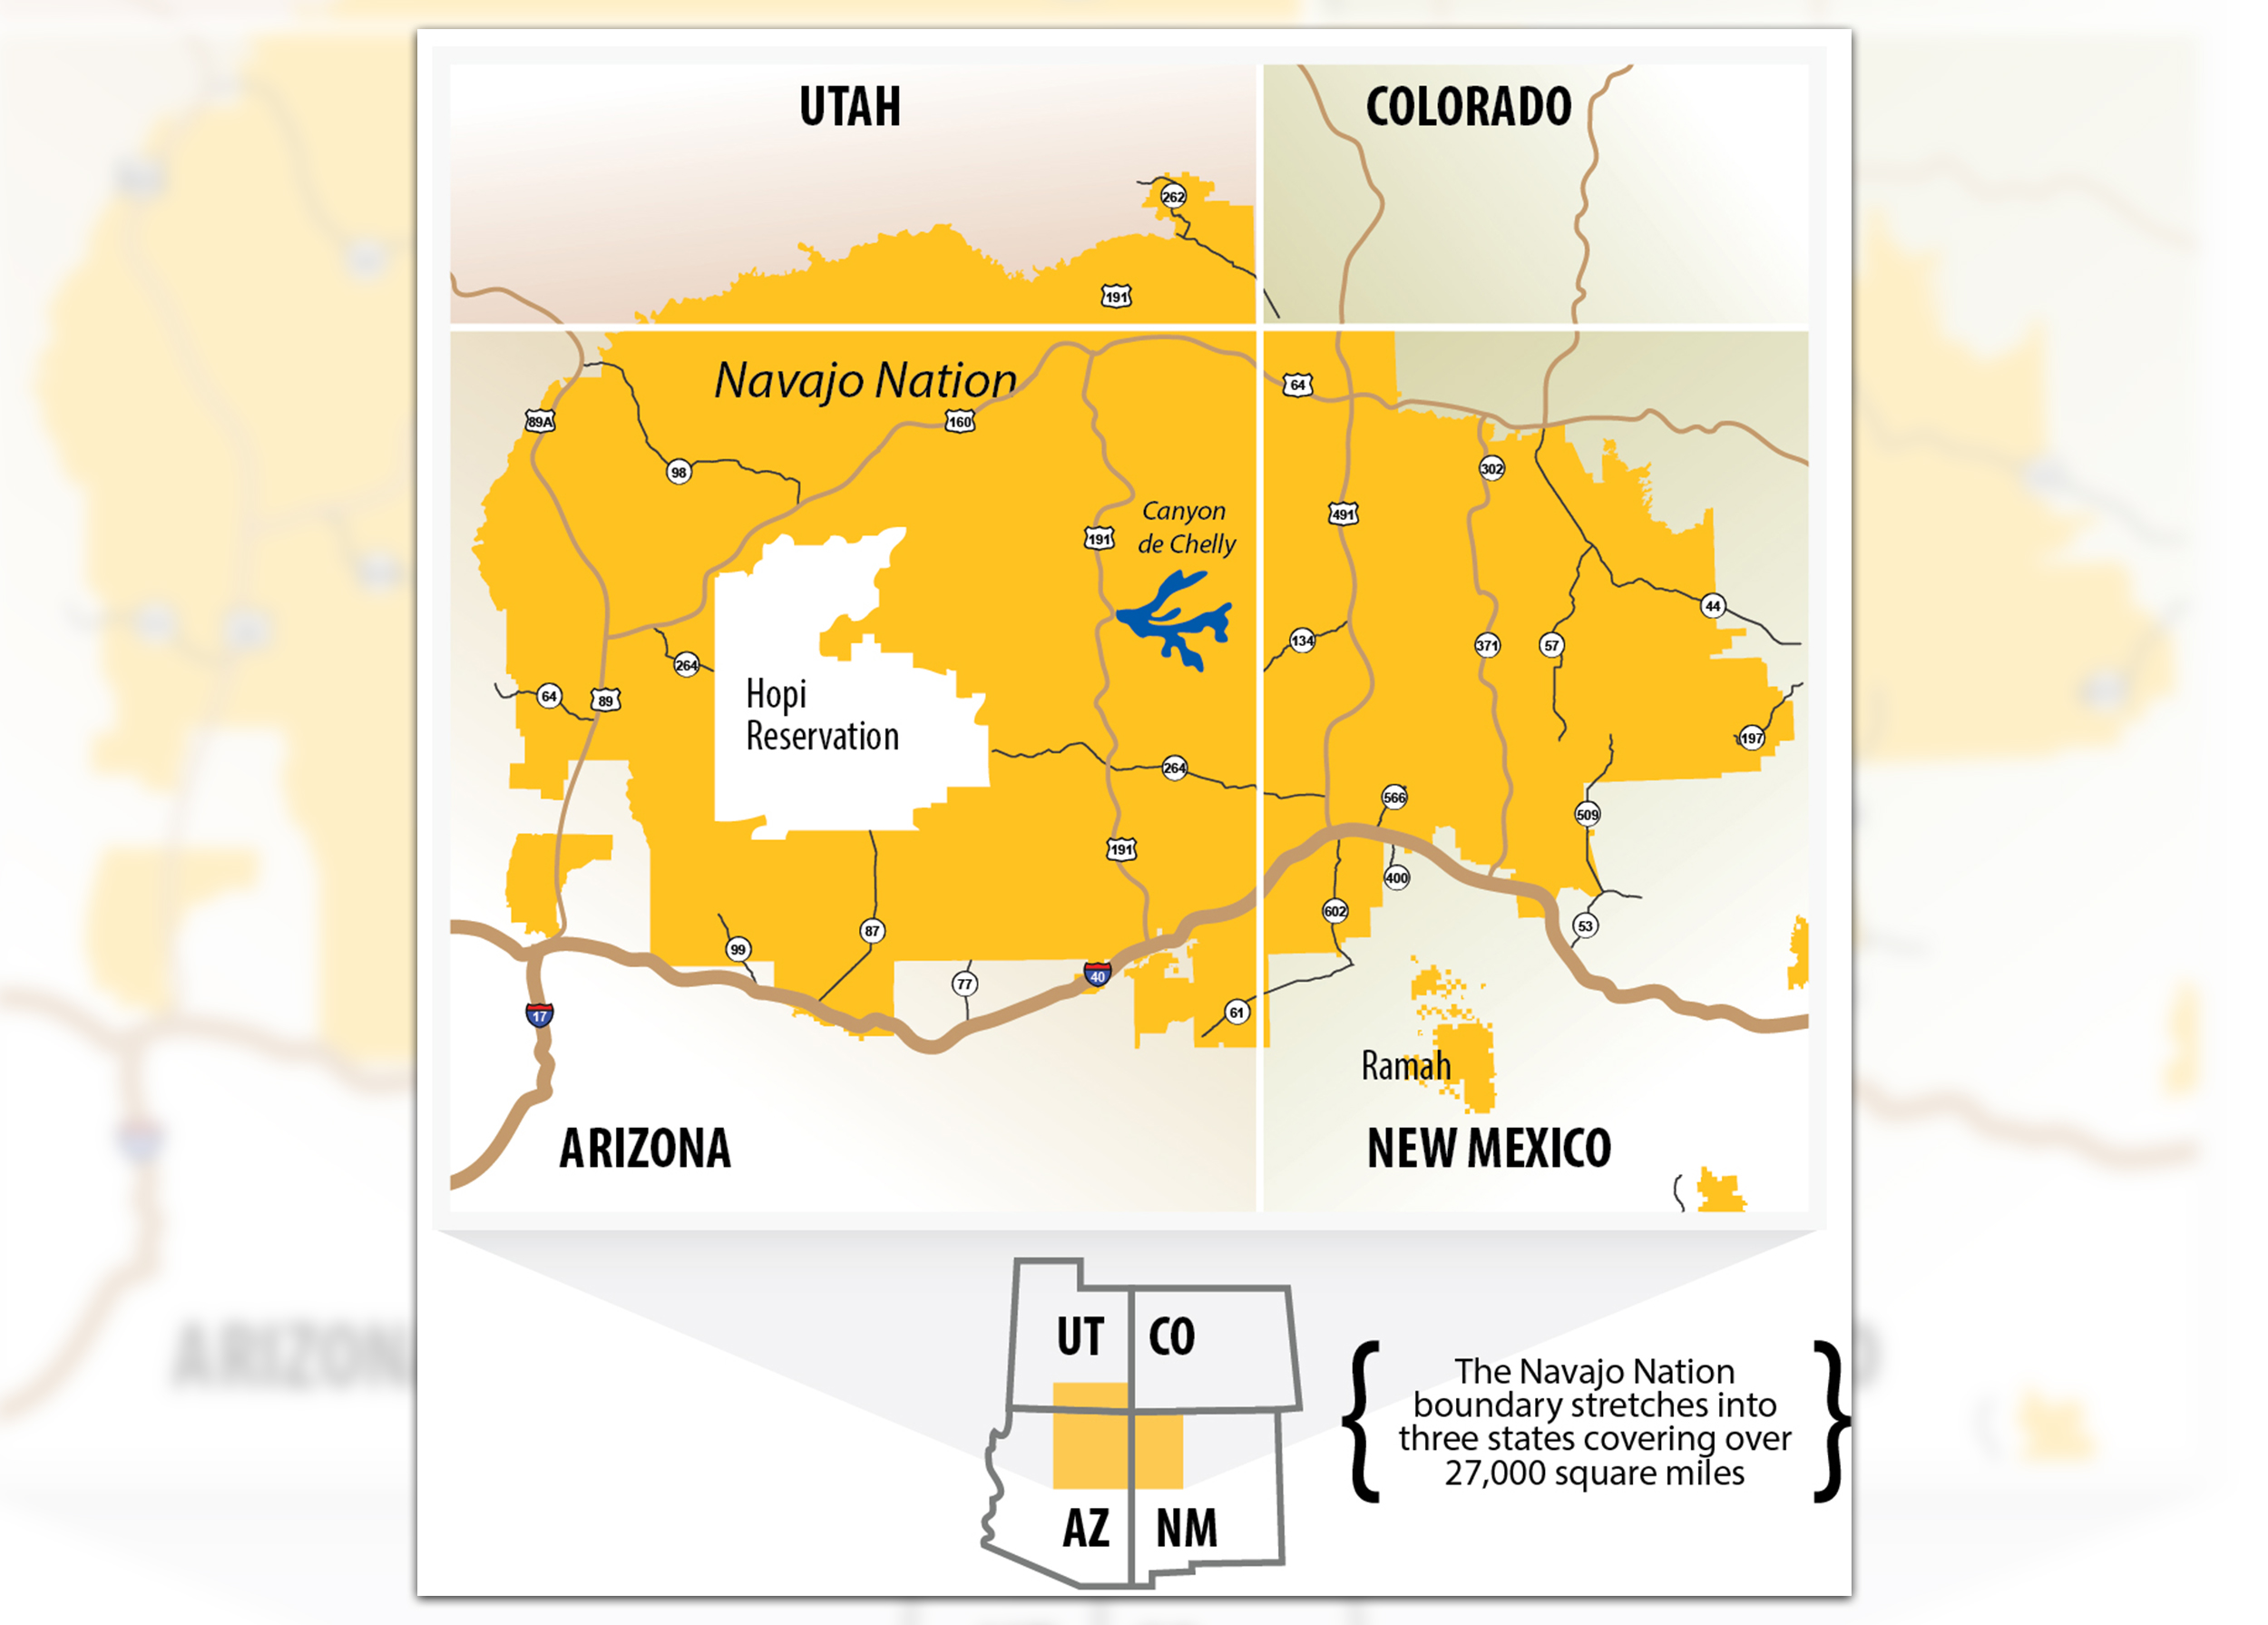 The Navajo Nation Long Range Transportation Plan (LRTP) covers 27,000 square miles of Utah, Arizona, and New Mexico.